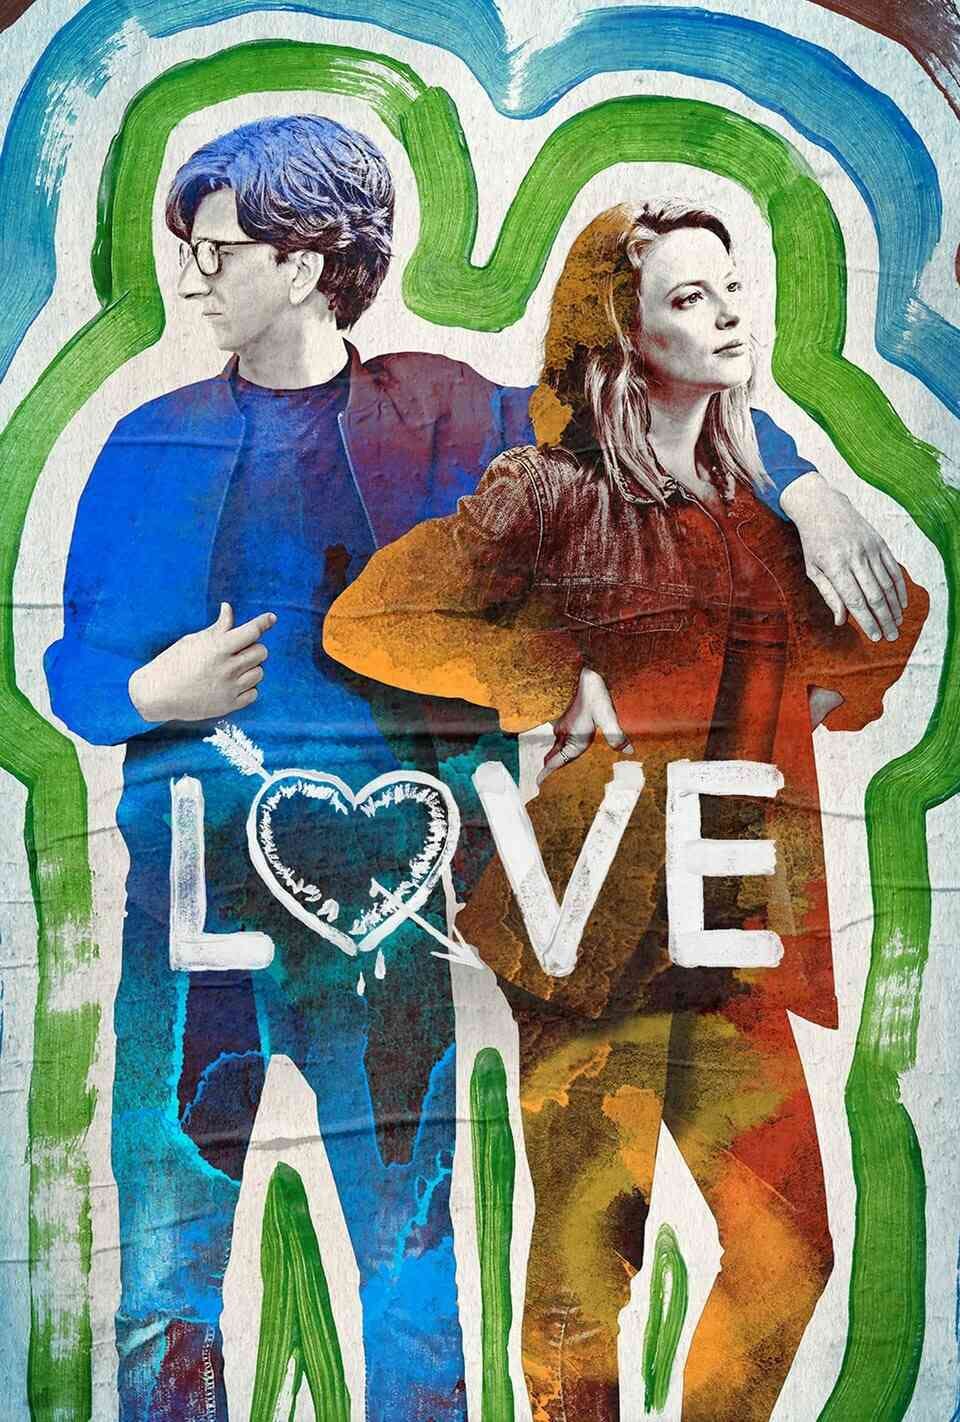 Read Love screenplay (poster)